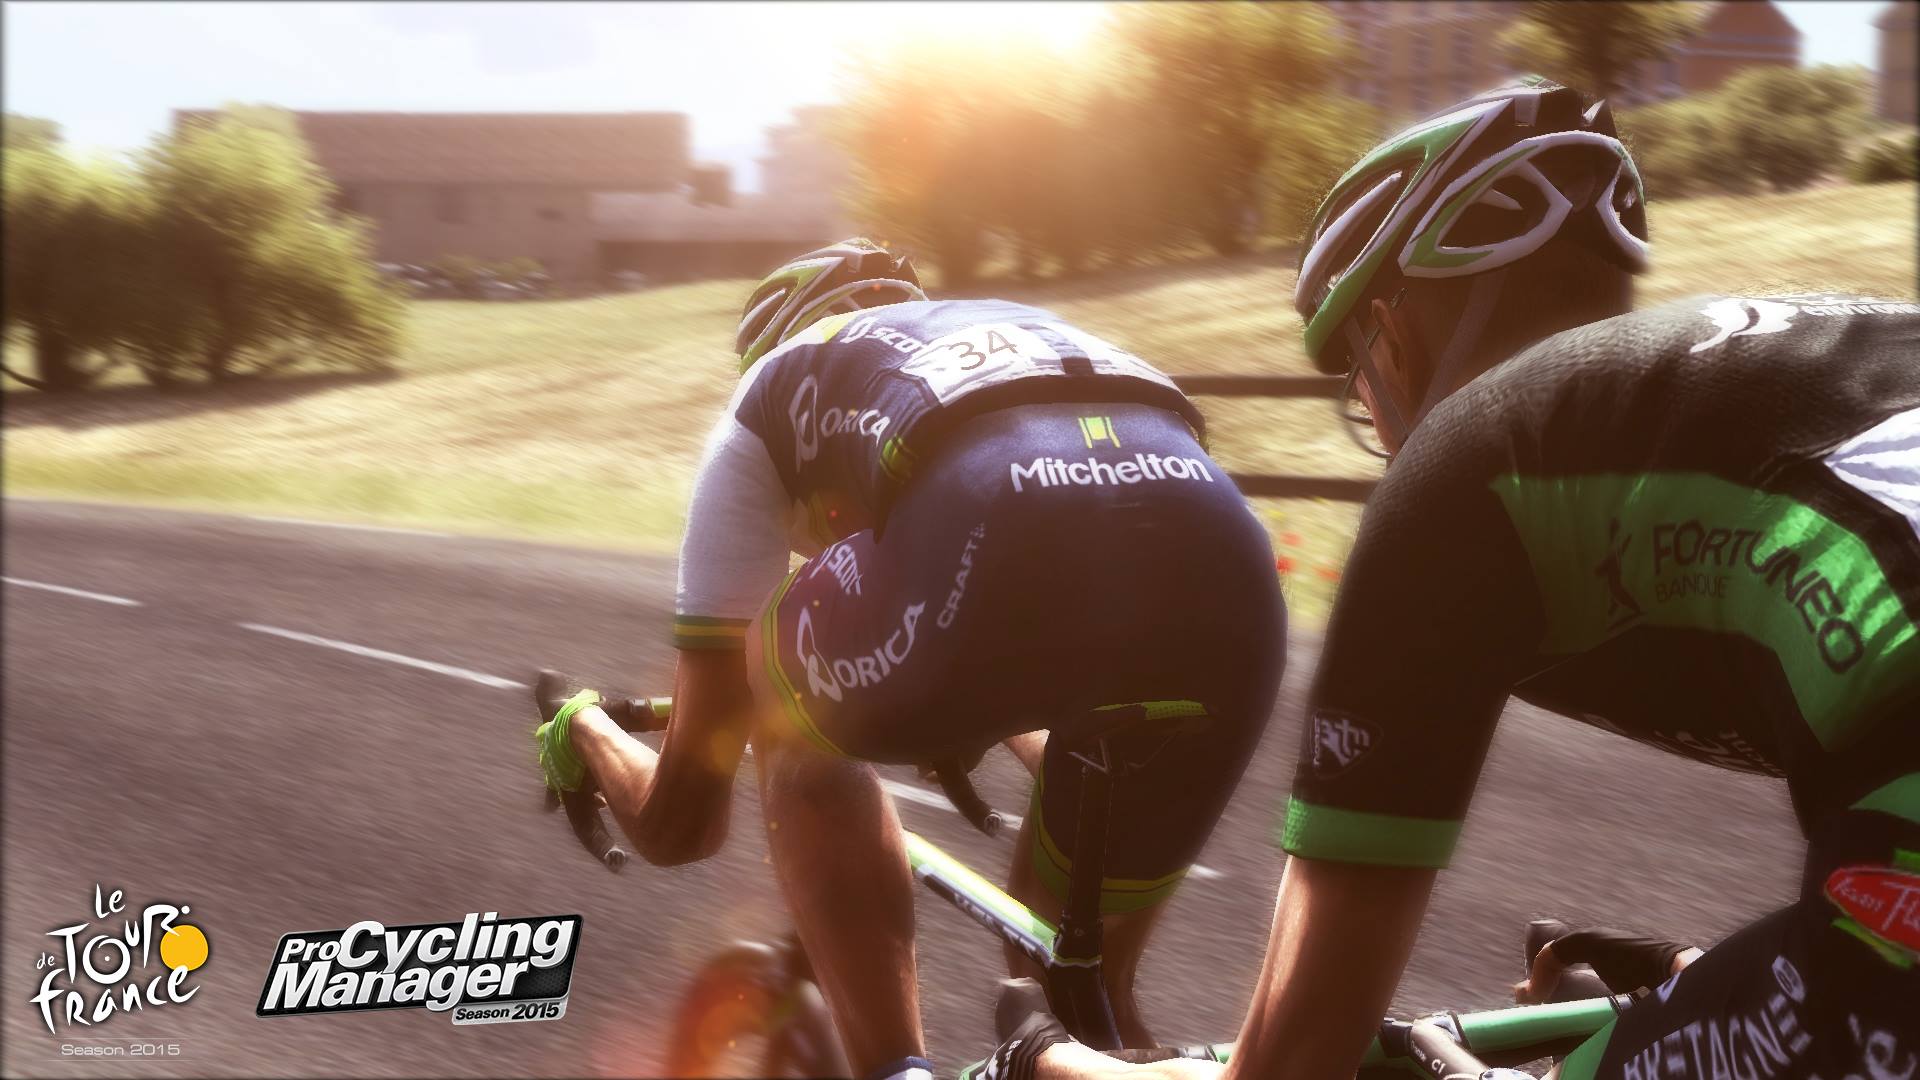 Rivelati i primi screenshots di Pro Cycling Manager 2015 e di Le Tour De France 2015